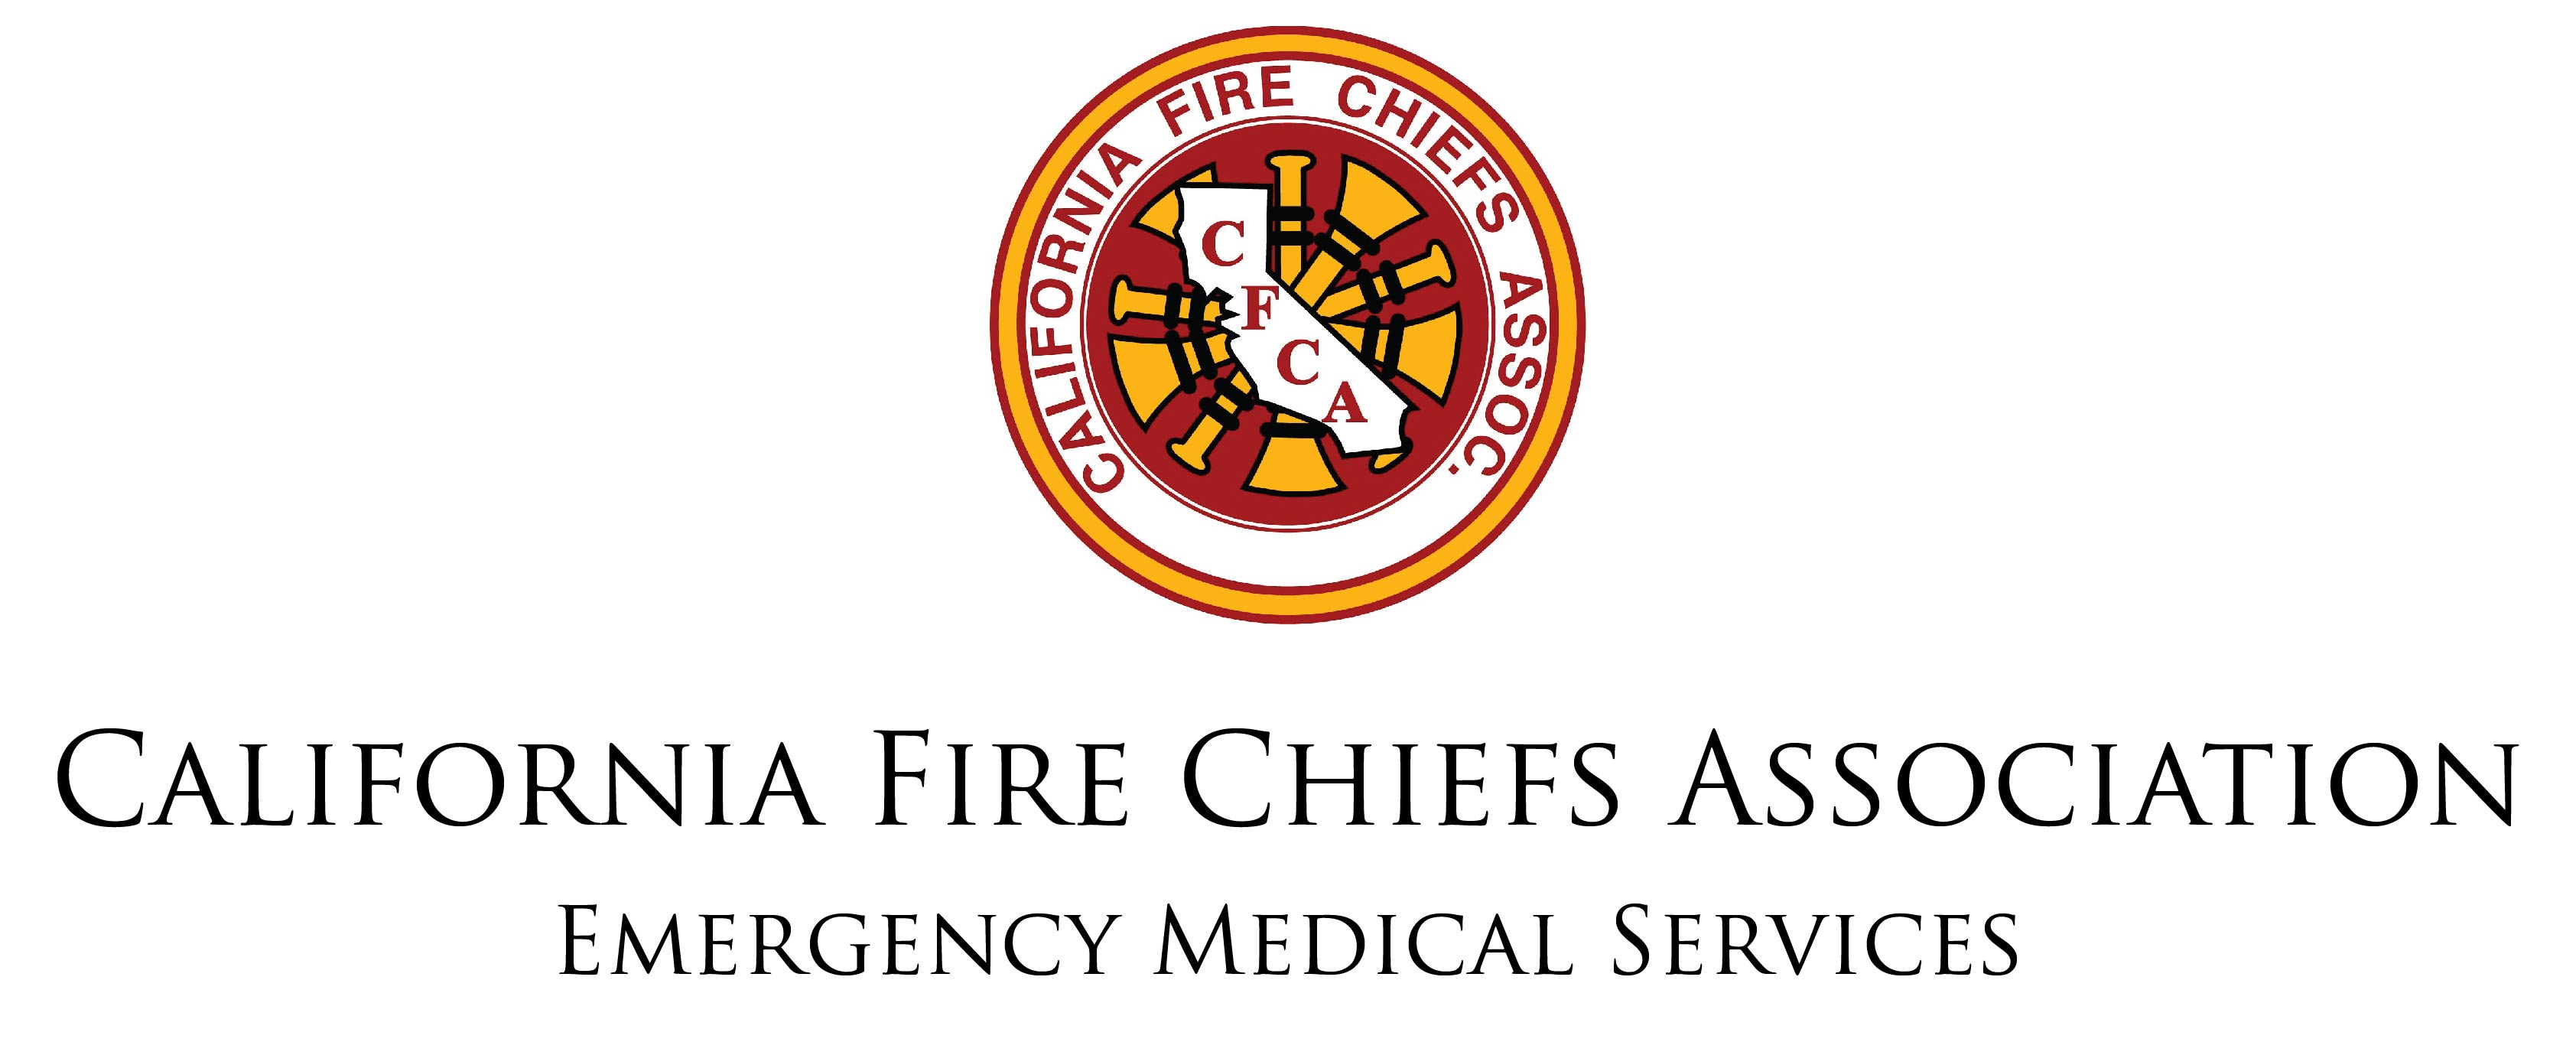 California Fire Chiefs Association - Emergency Medical Services